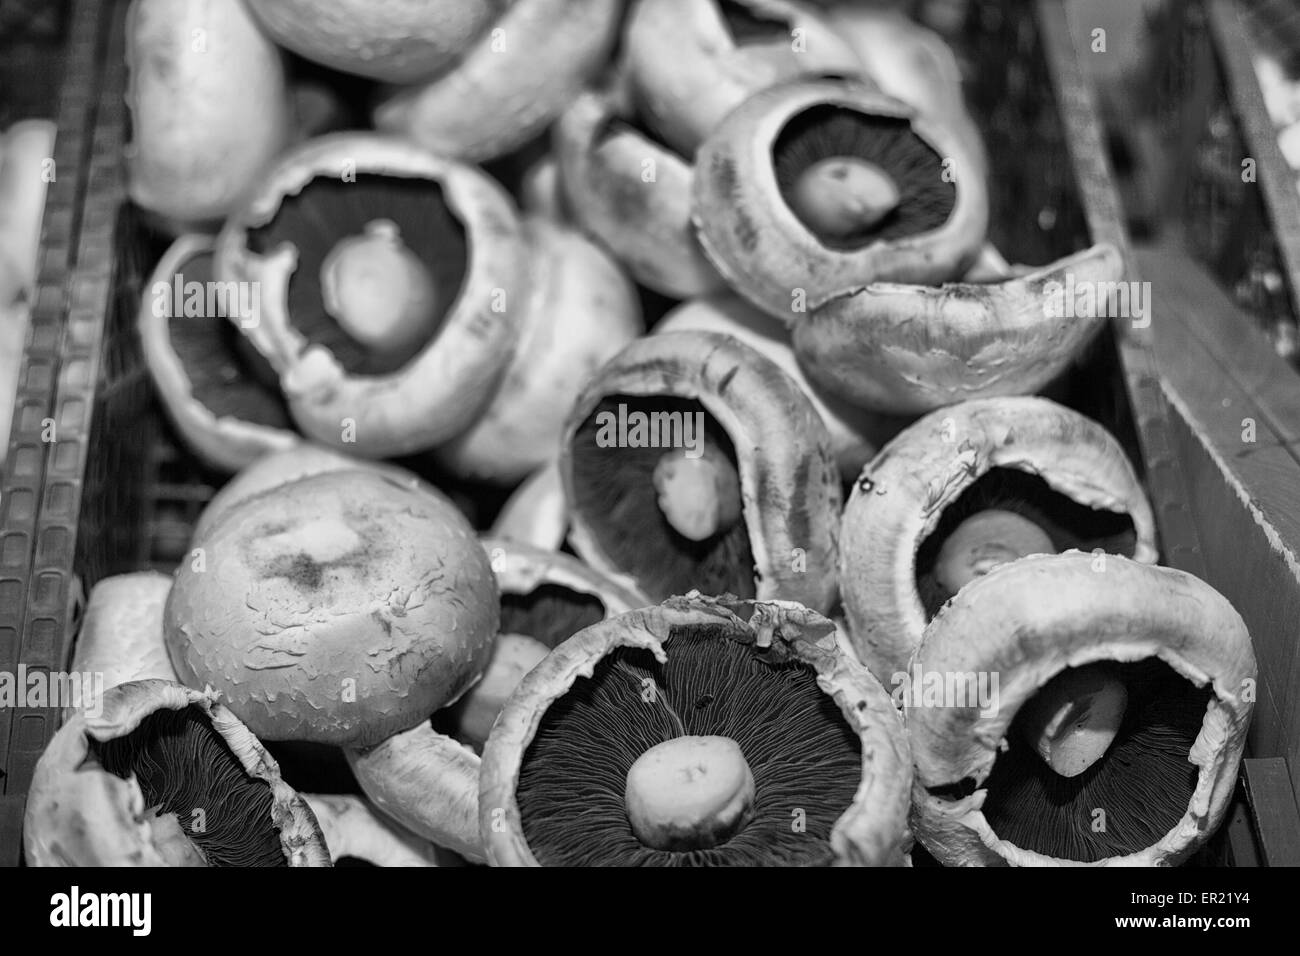 large organic mushrooms in black and white Stock Photo